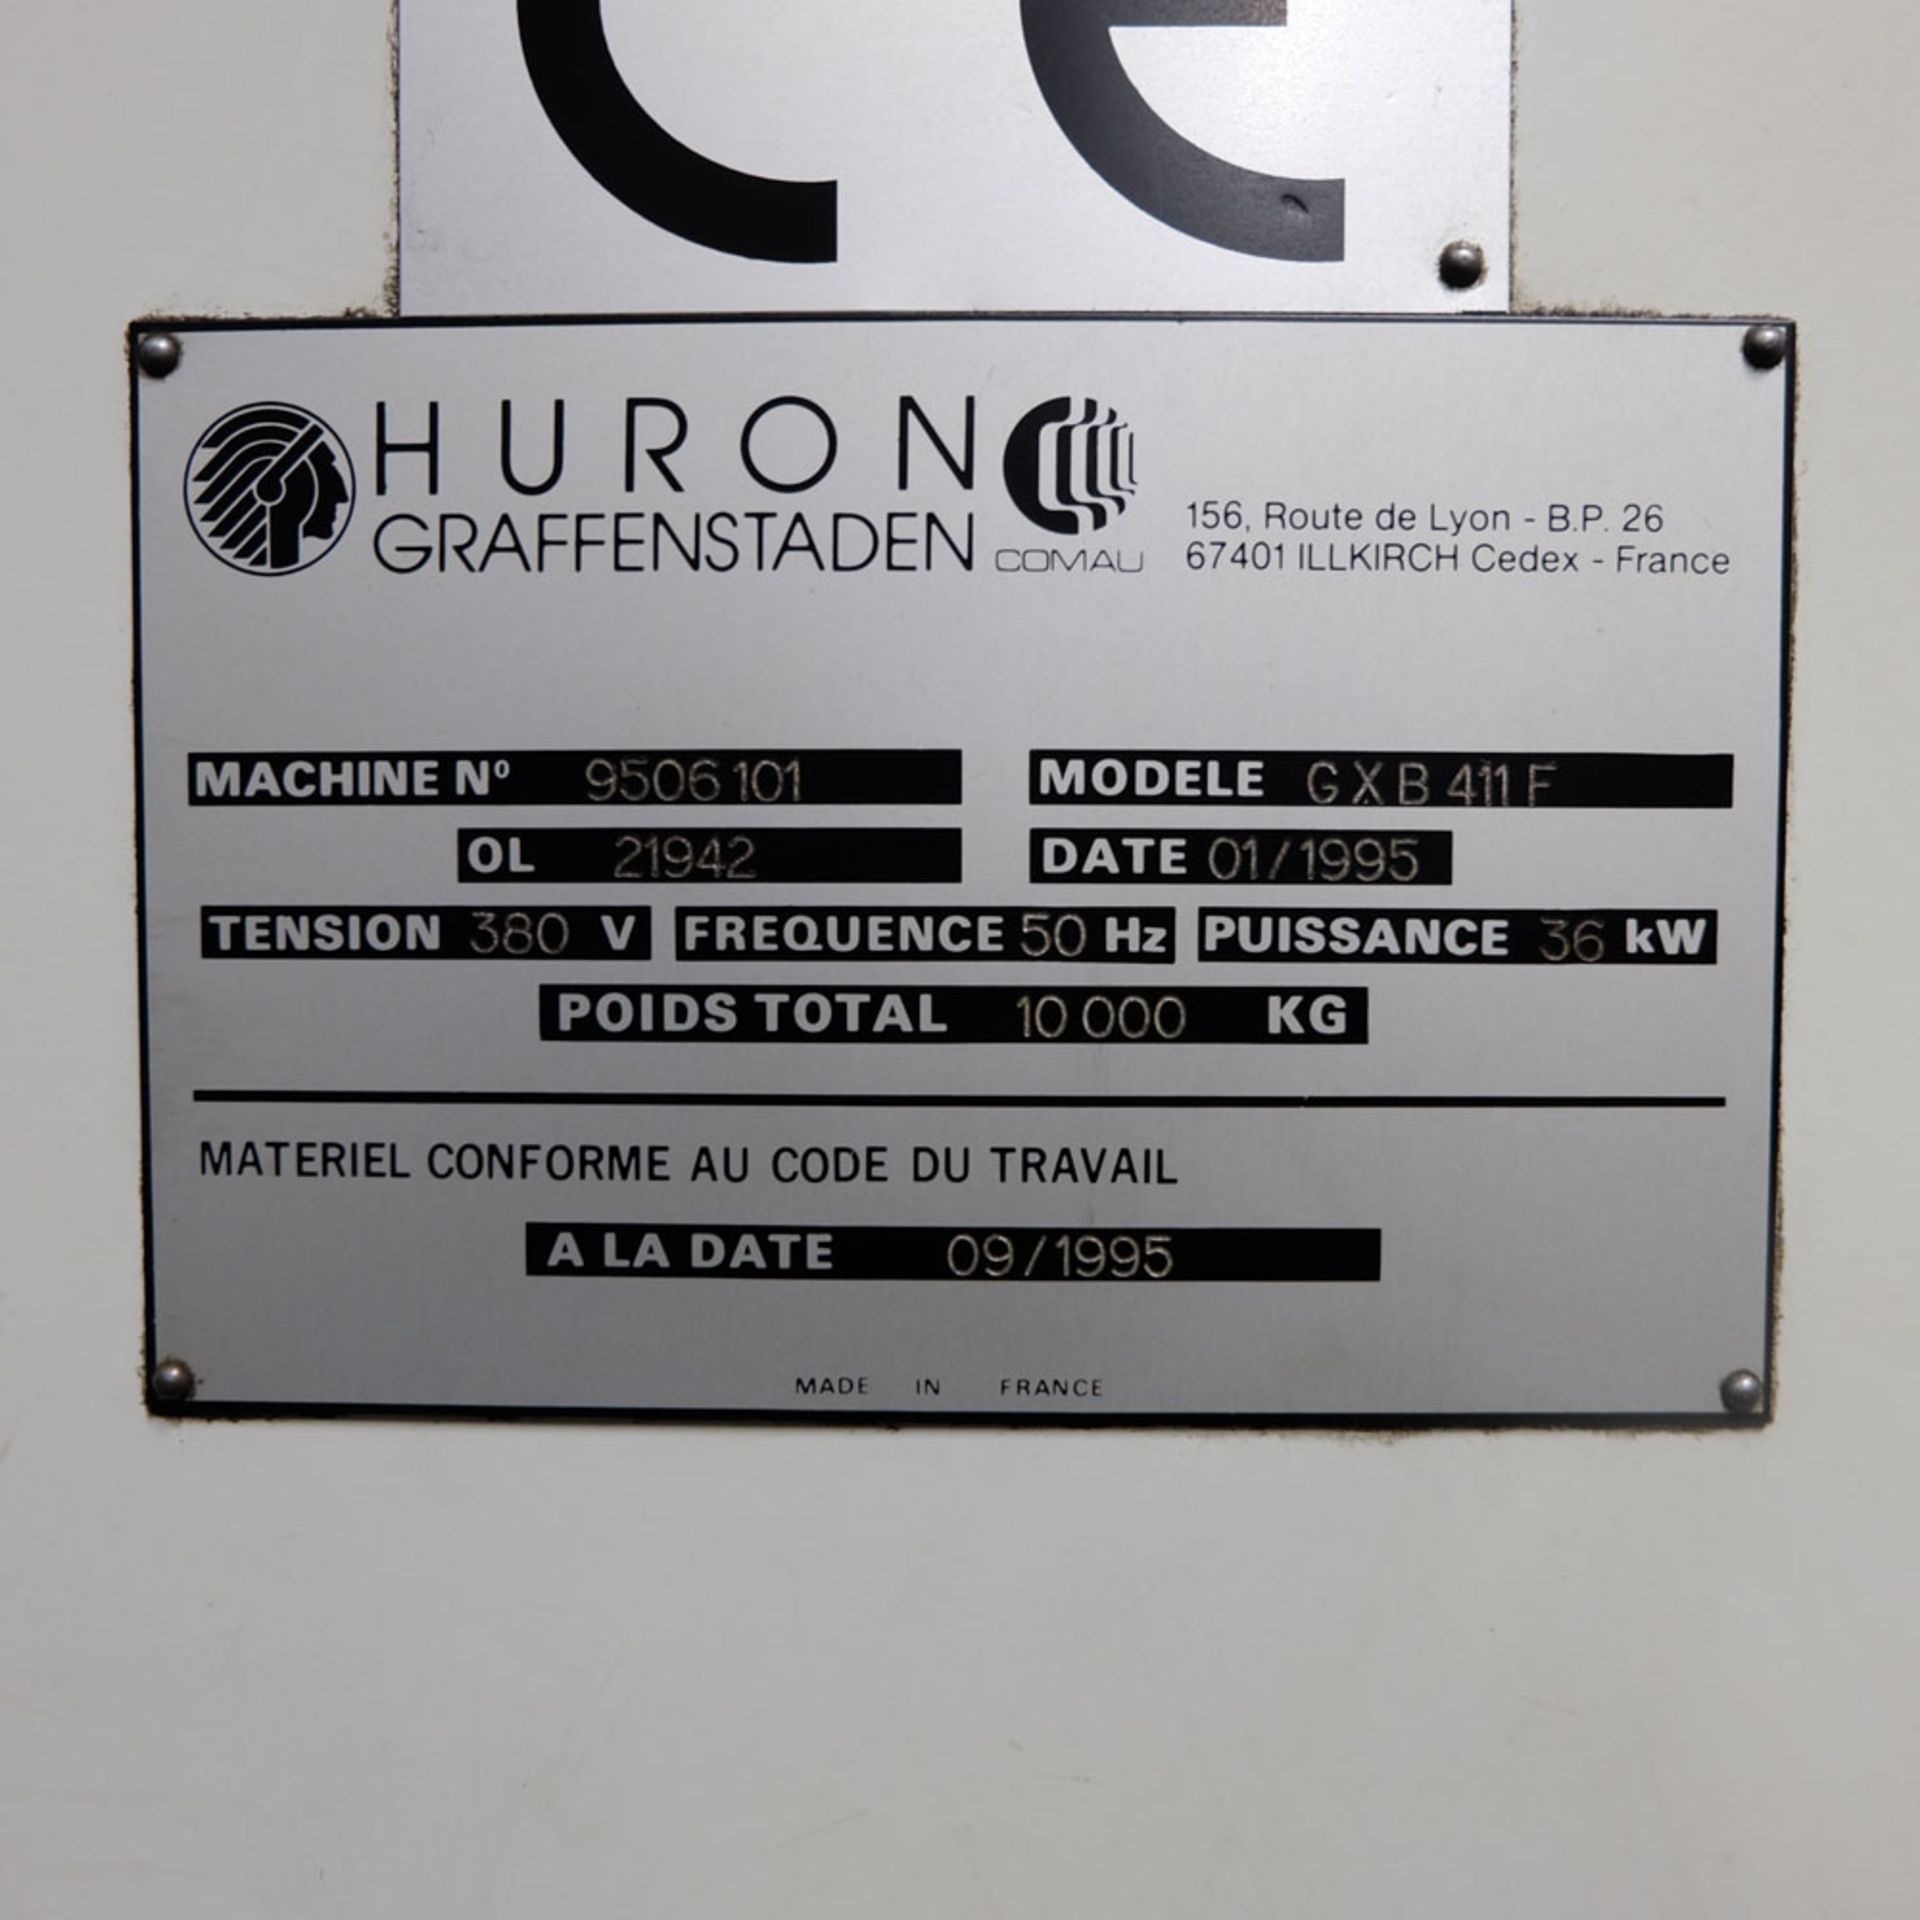 Huron GX 411 F Bed Type Milling Machine. Control Unit: CNC (HEIDENHAIN TNC 415B) - Image 10 of 12